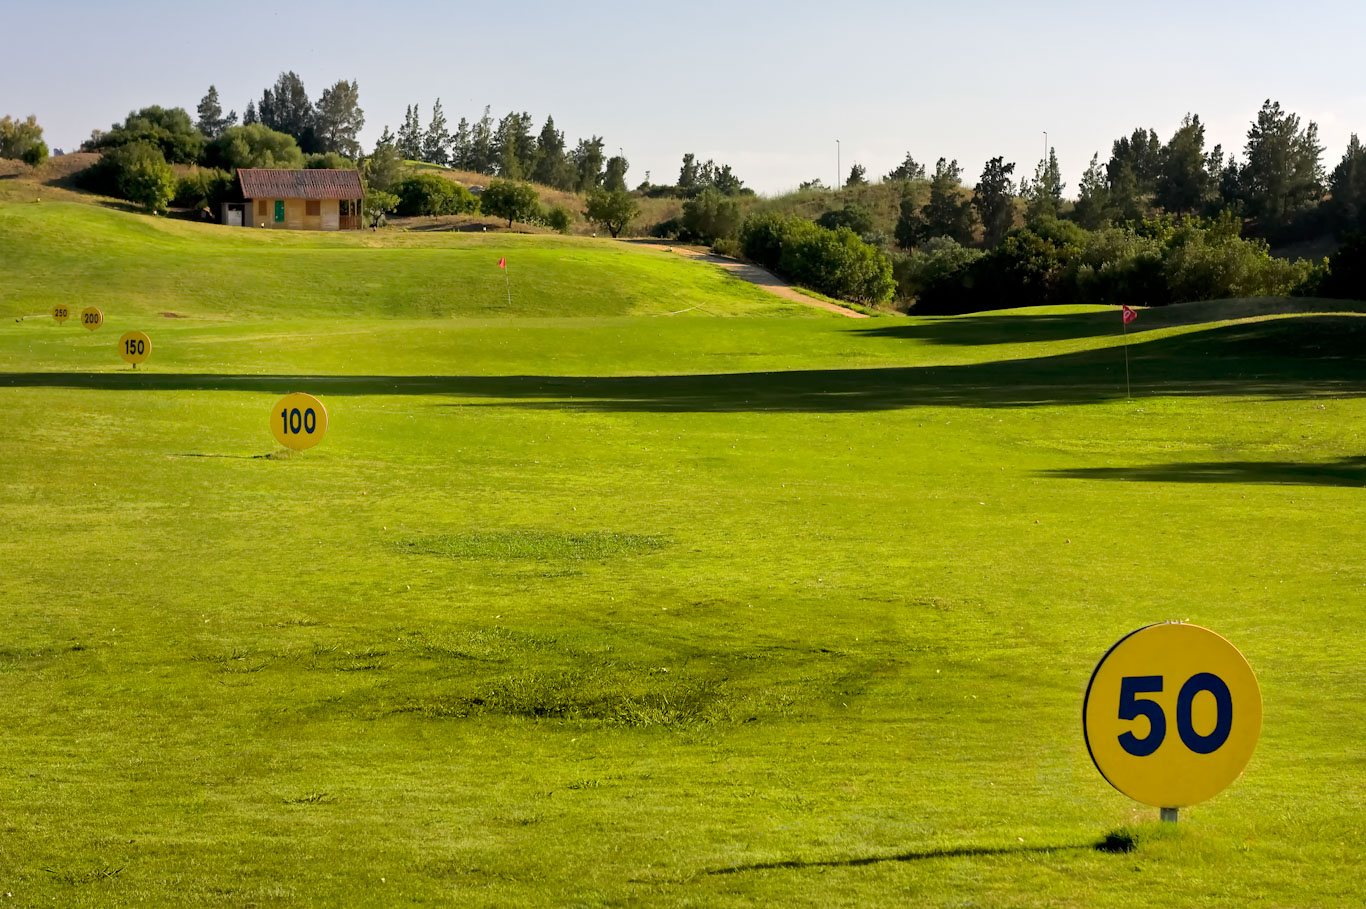 The practice area at Montecastillo Golf course, Jerez, Spain